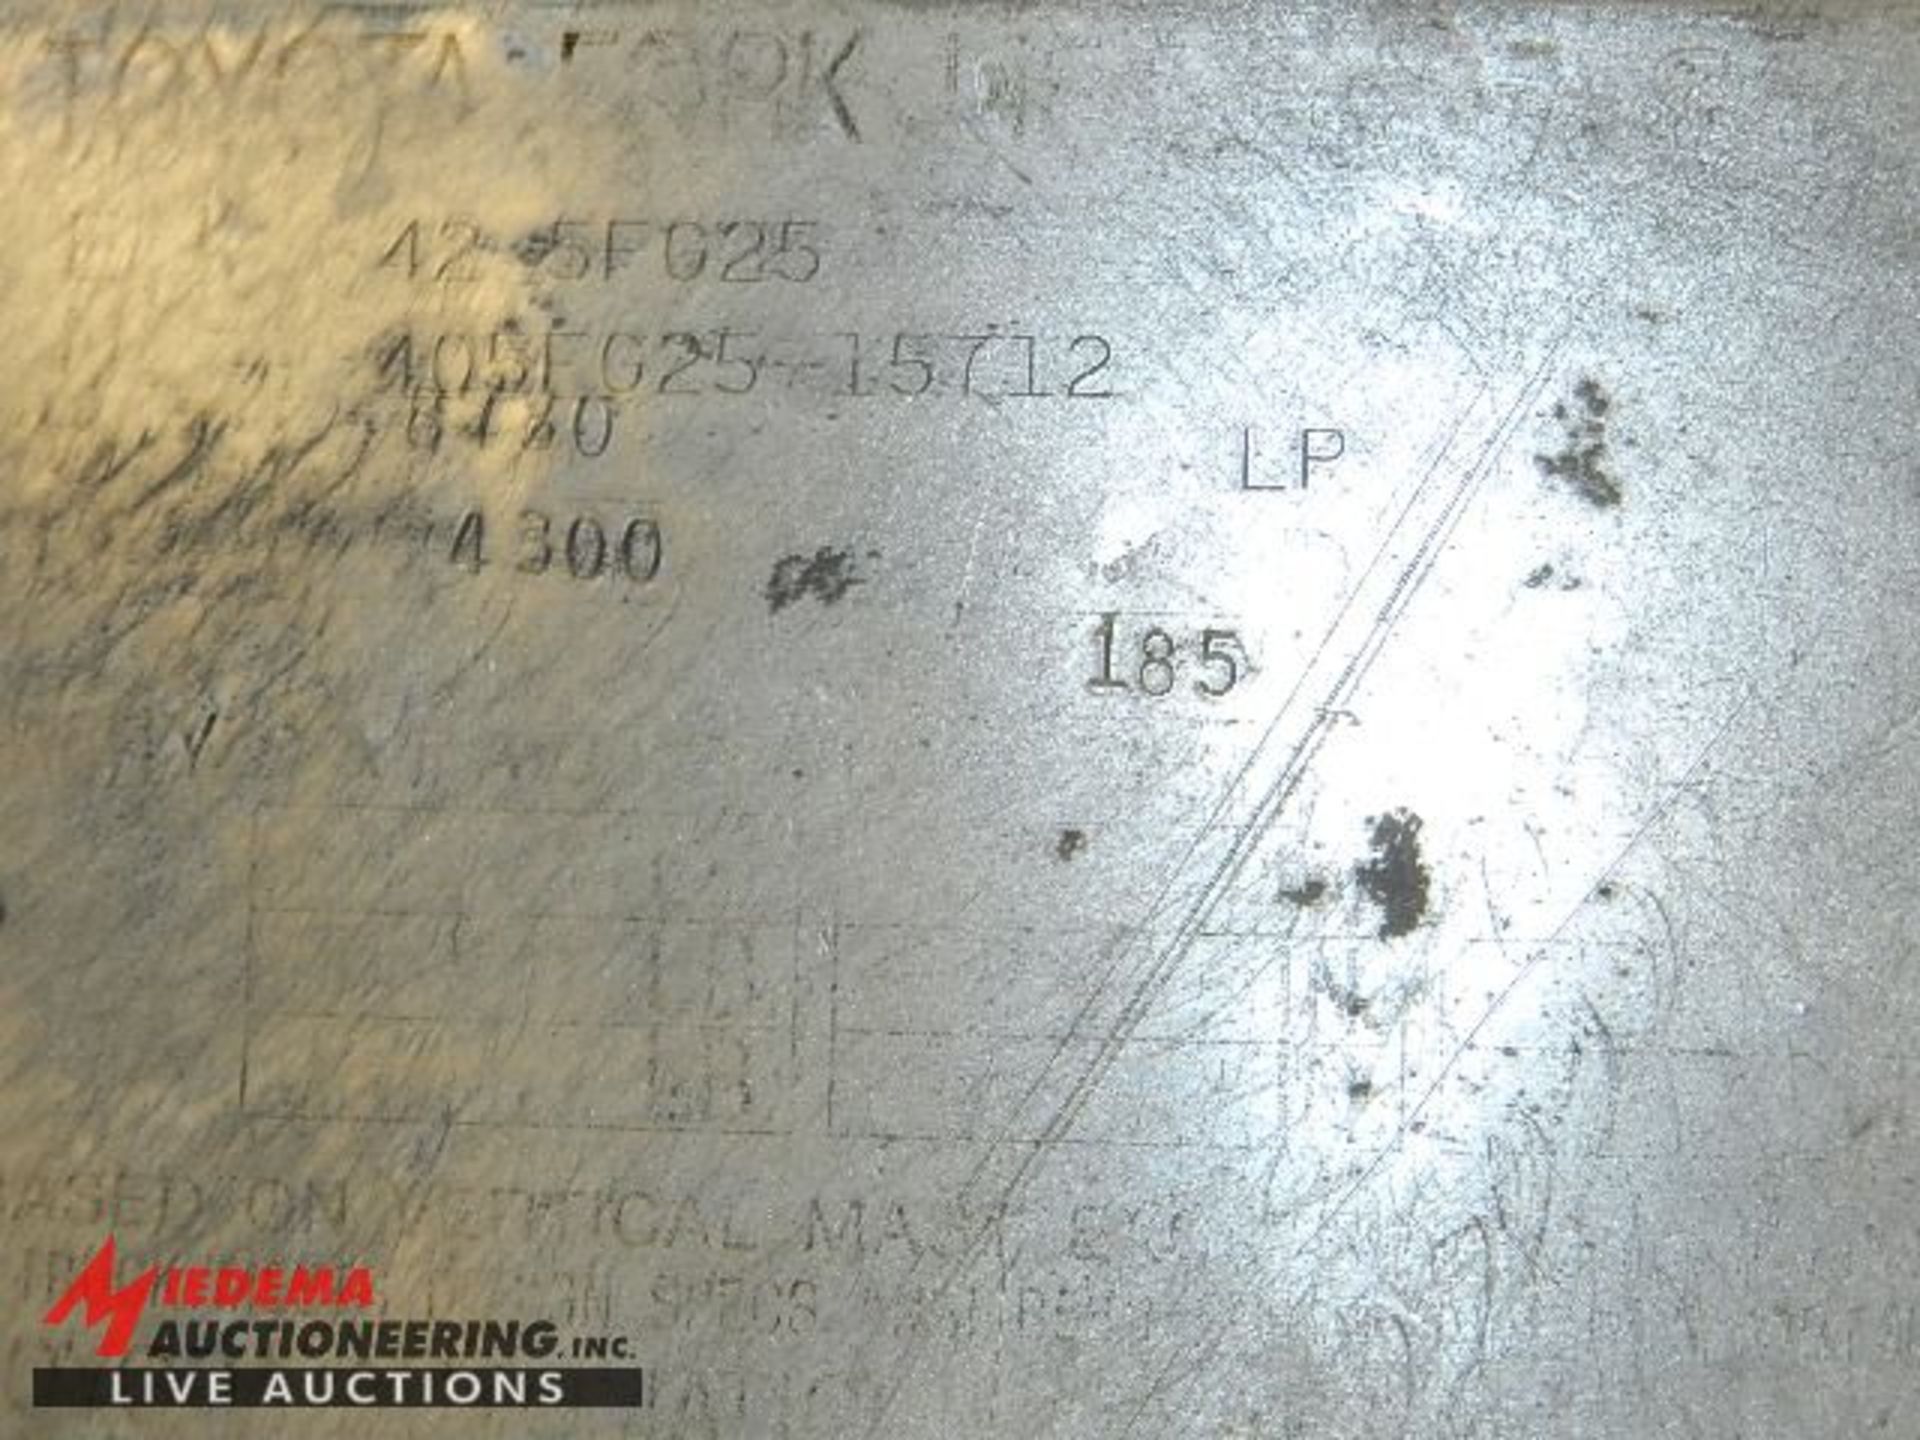 TOYOTA 42-5FG25 LP FORKLIFT TRUCK, HAS 12,109 HOURS SHOWING, 3 STAGE MAST, 42'' FORKS, SIDE SHIFT, - Image 6 of 7